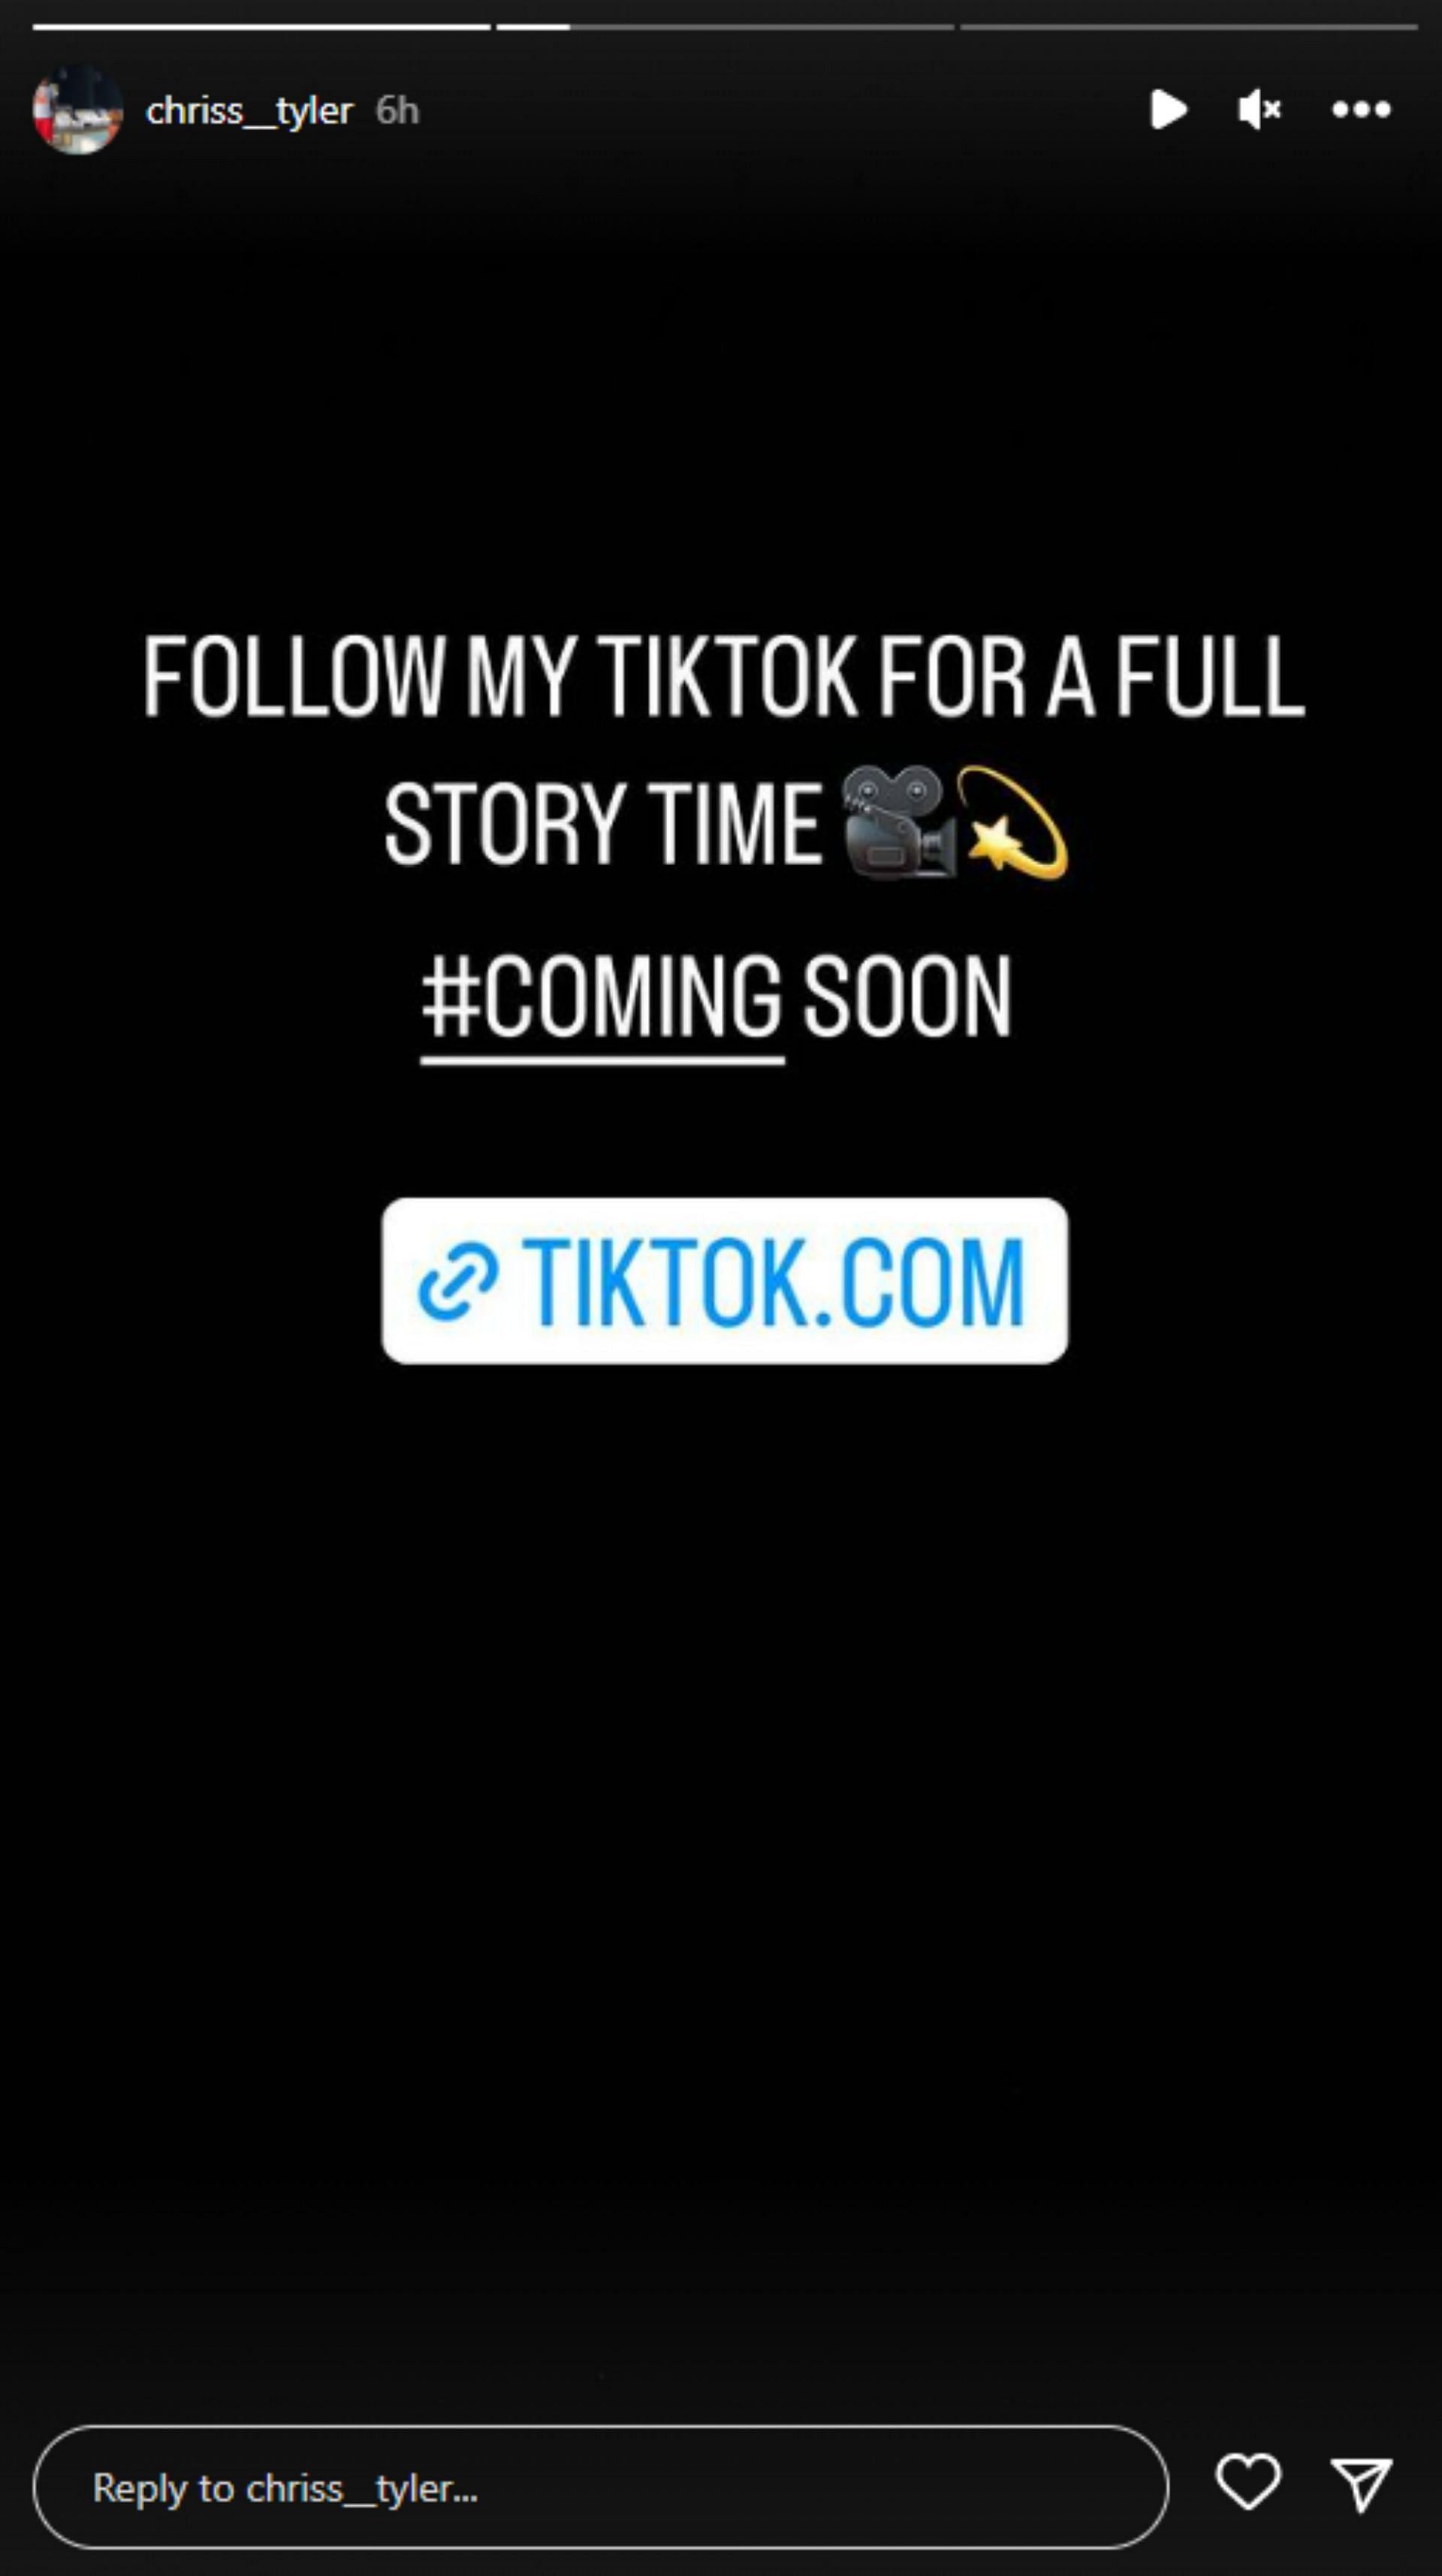 Christopher G takes to Instagram to inform followers that he will address the matter on TikTok (Image via chriss__tyler/ Instagram)